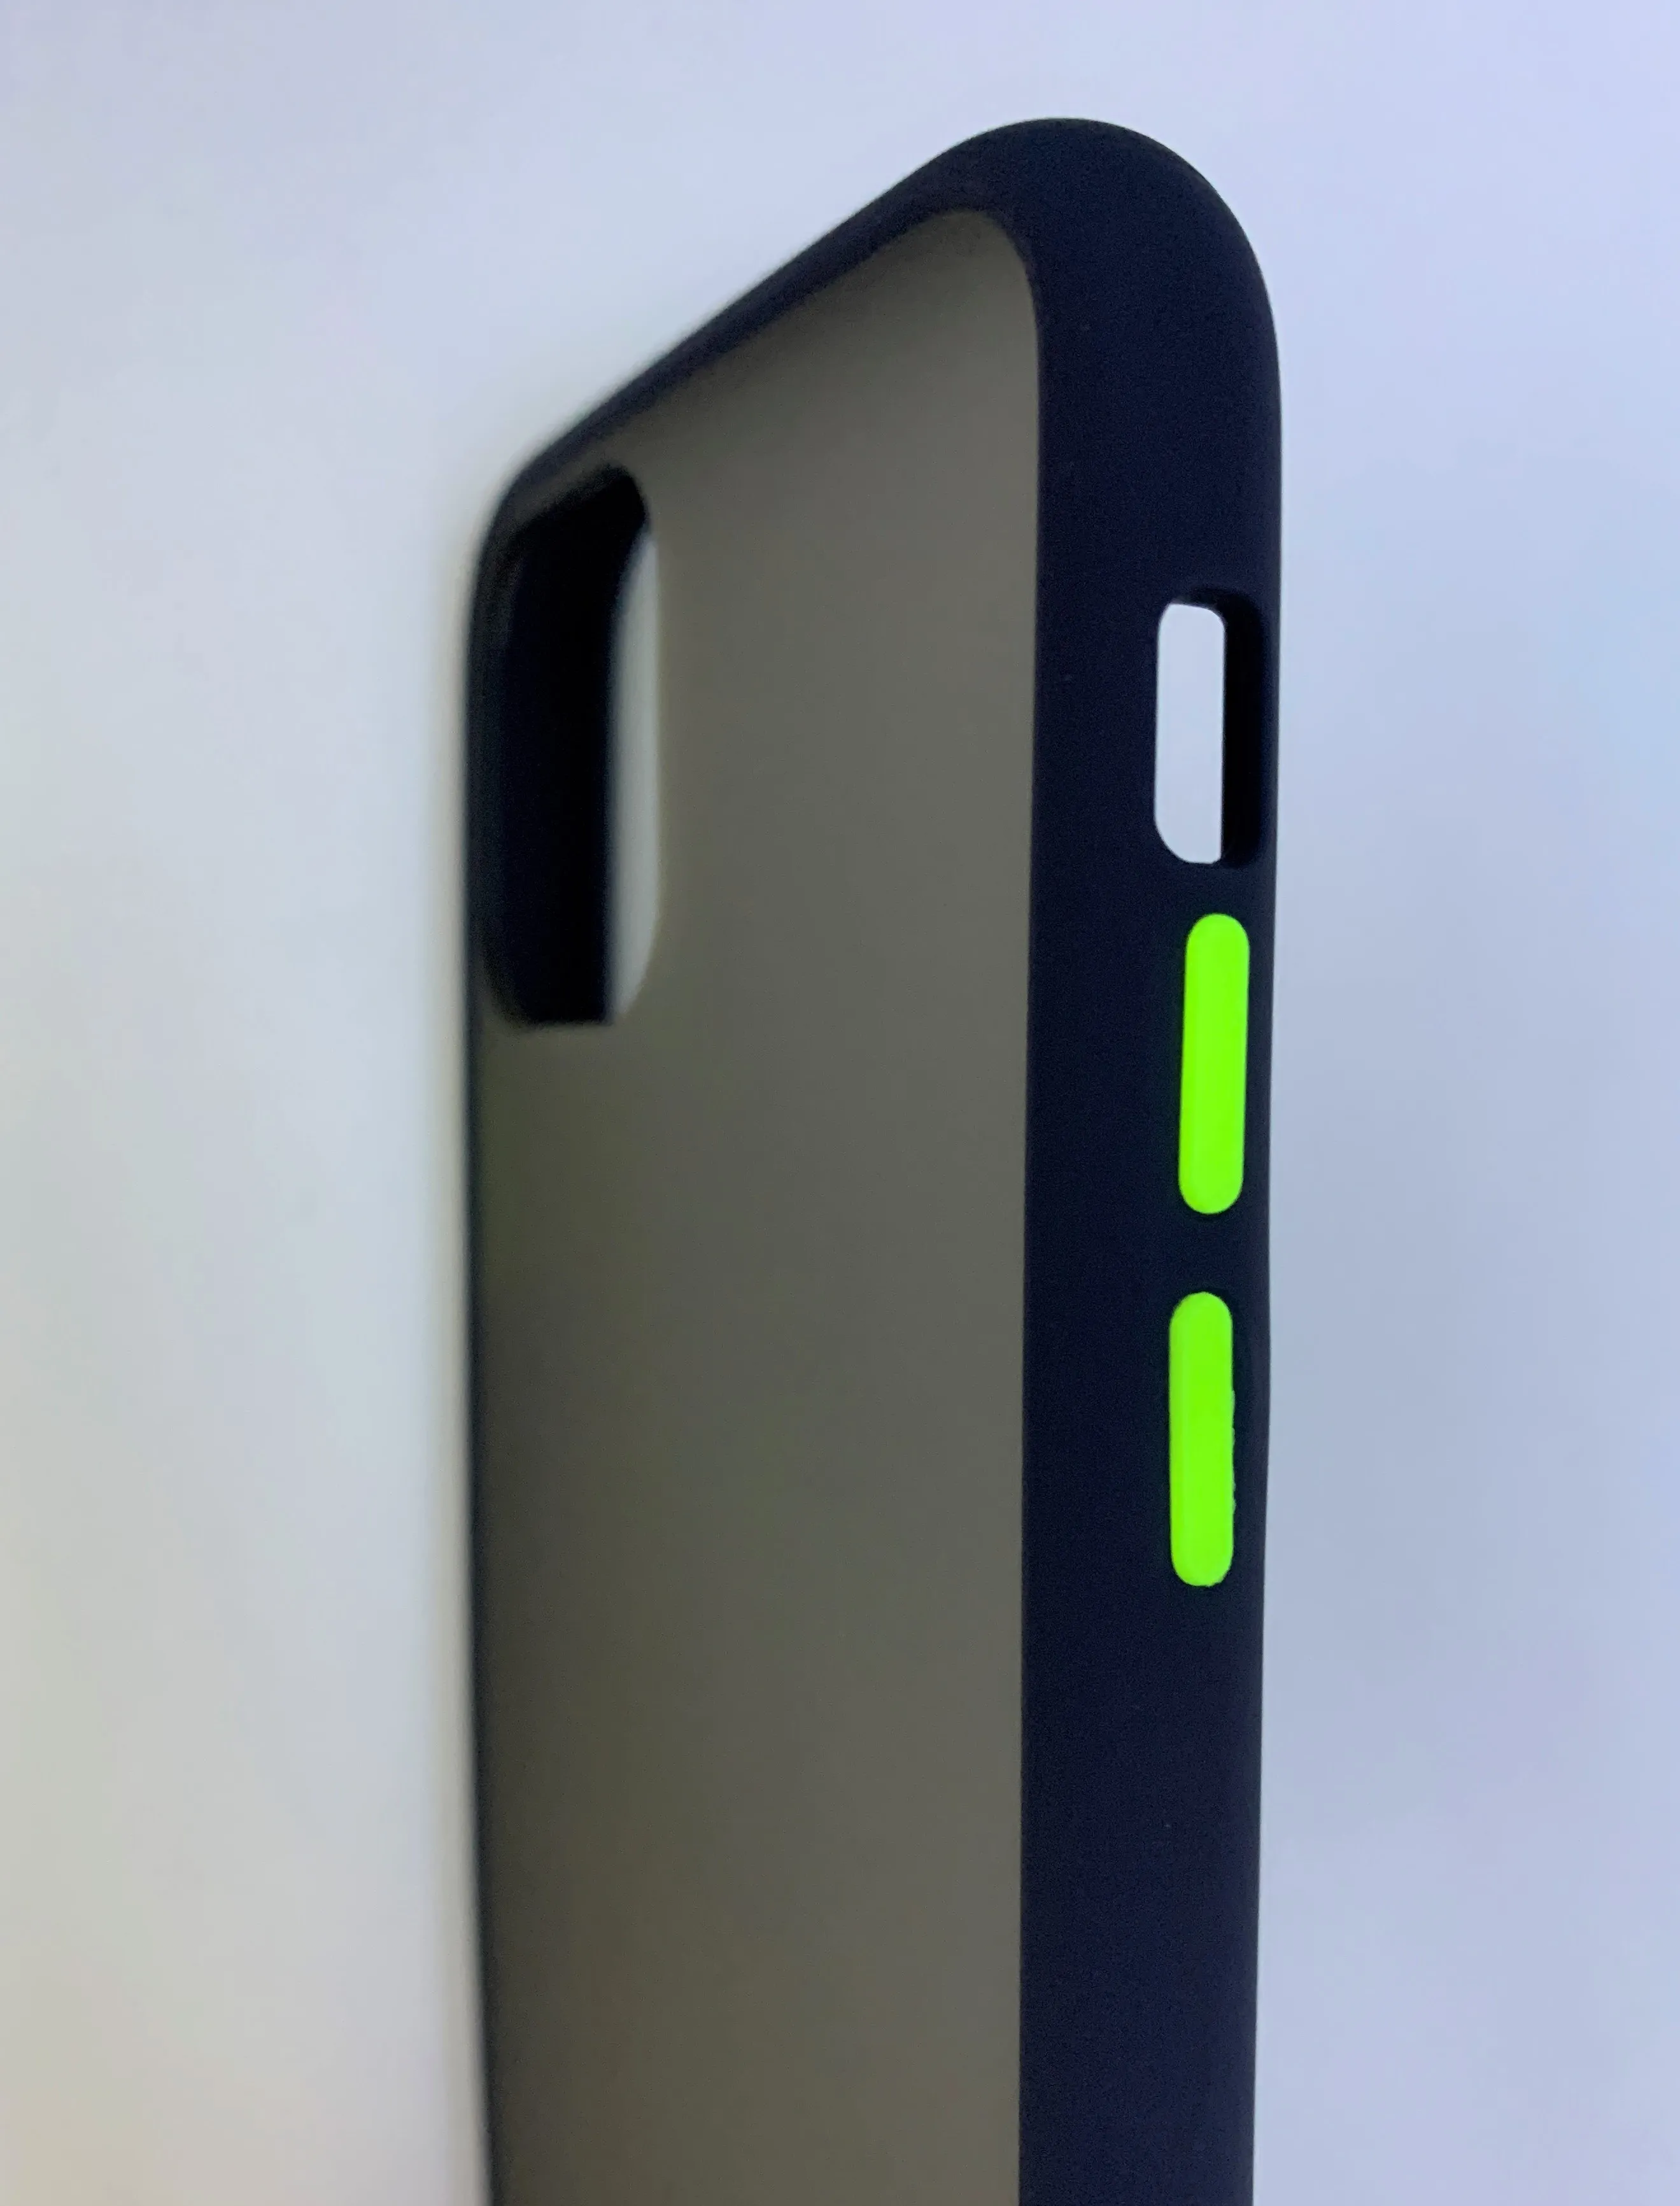 фото Чехол-накладка для Apple iPhone 11 Pro с бампером пластик/силикон (прозрачно-черный/синий)